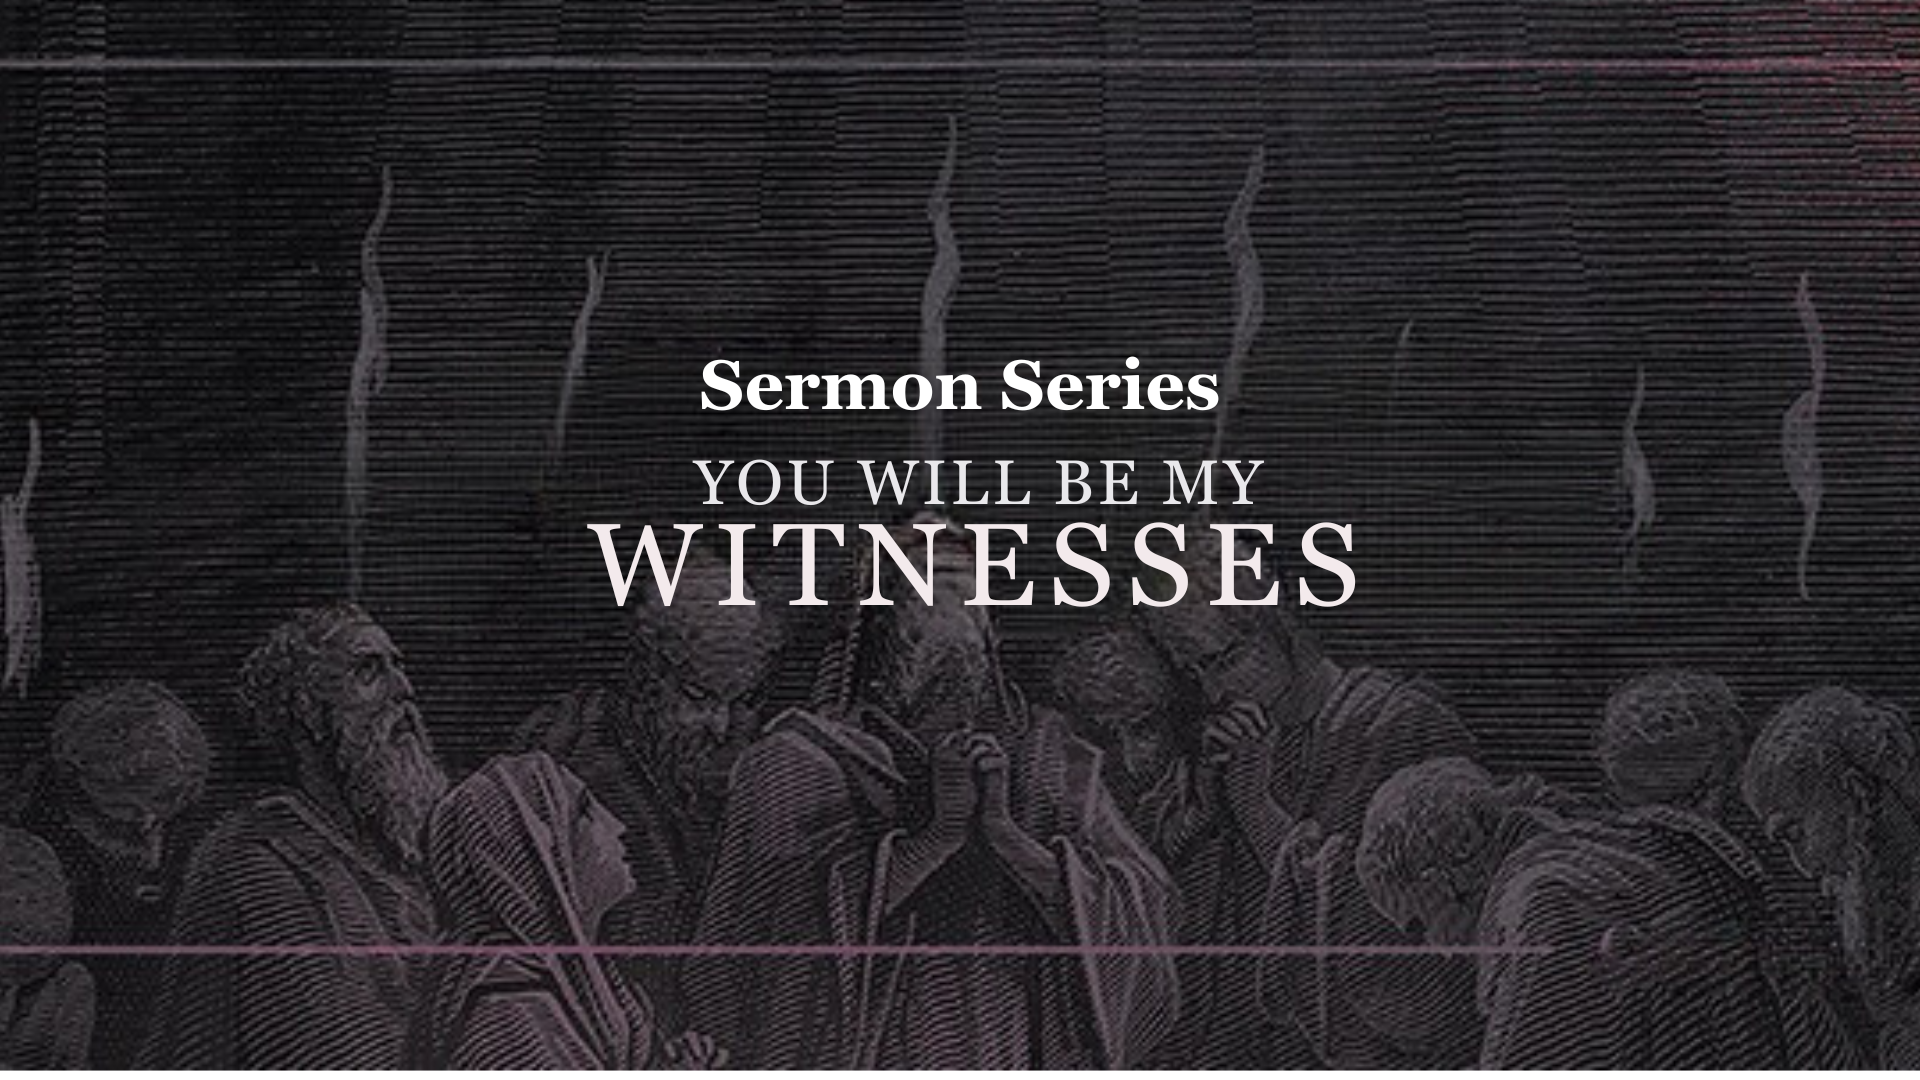 Sermon Series Witnesses